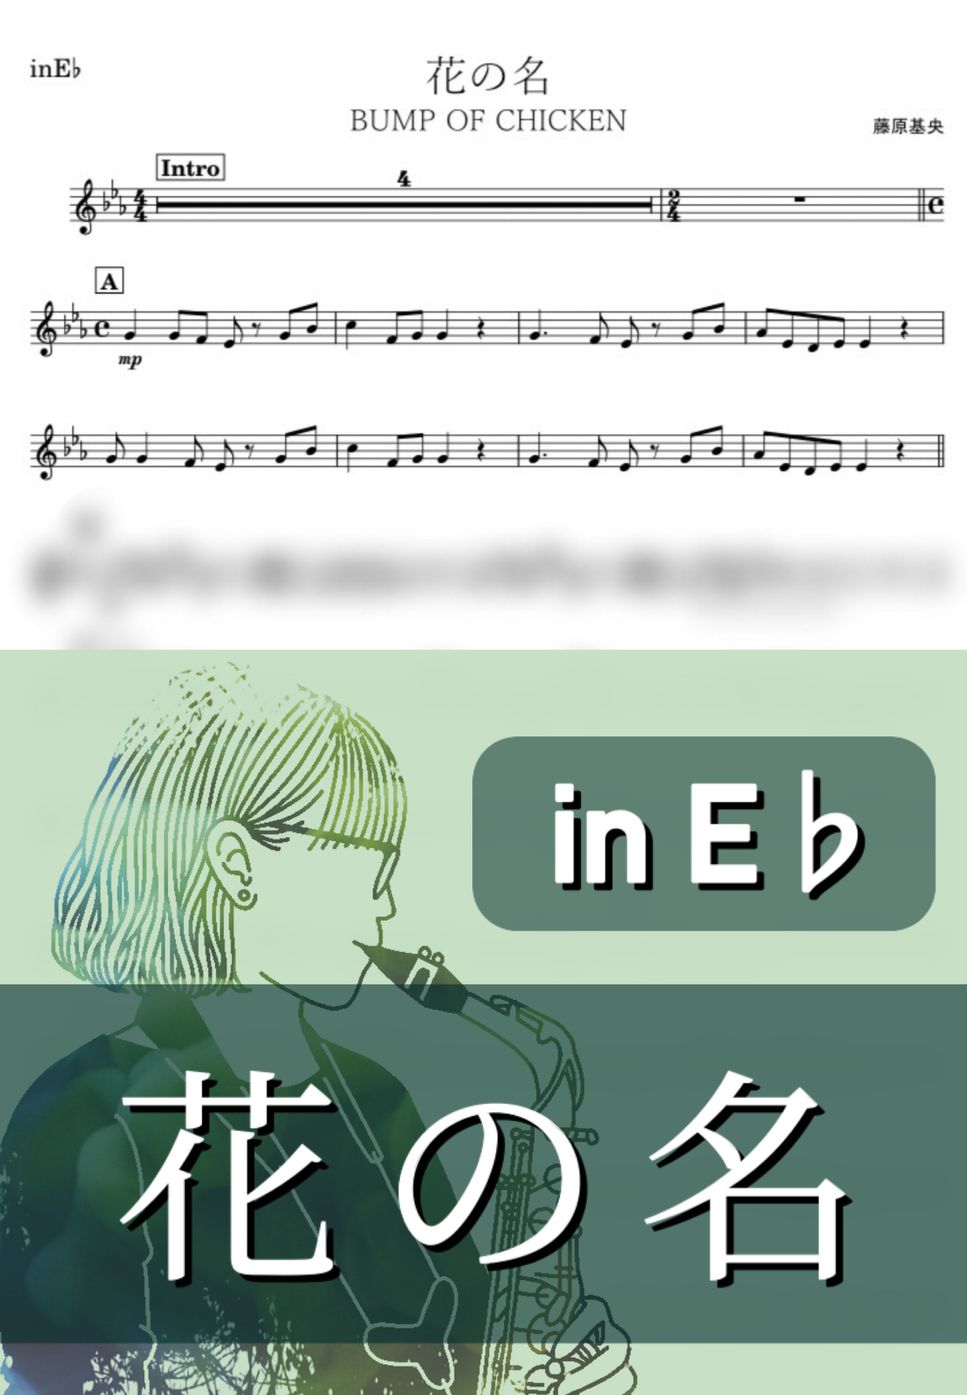 BUMP OF CHICKEN - 花の名 (E♭) by kanamusic